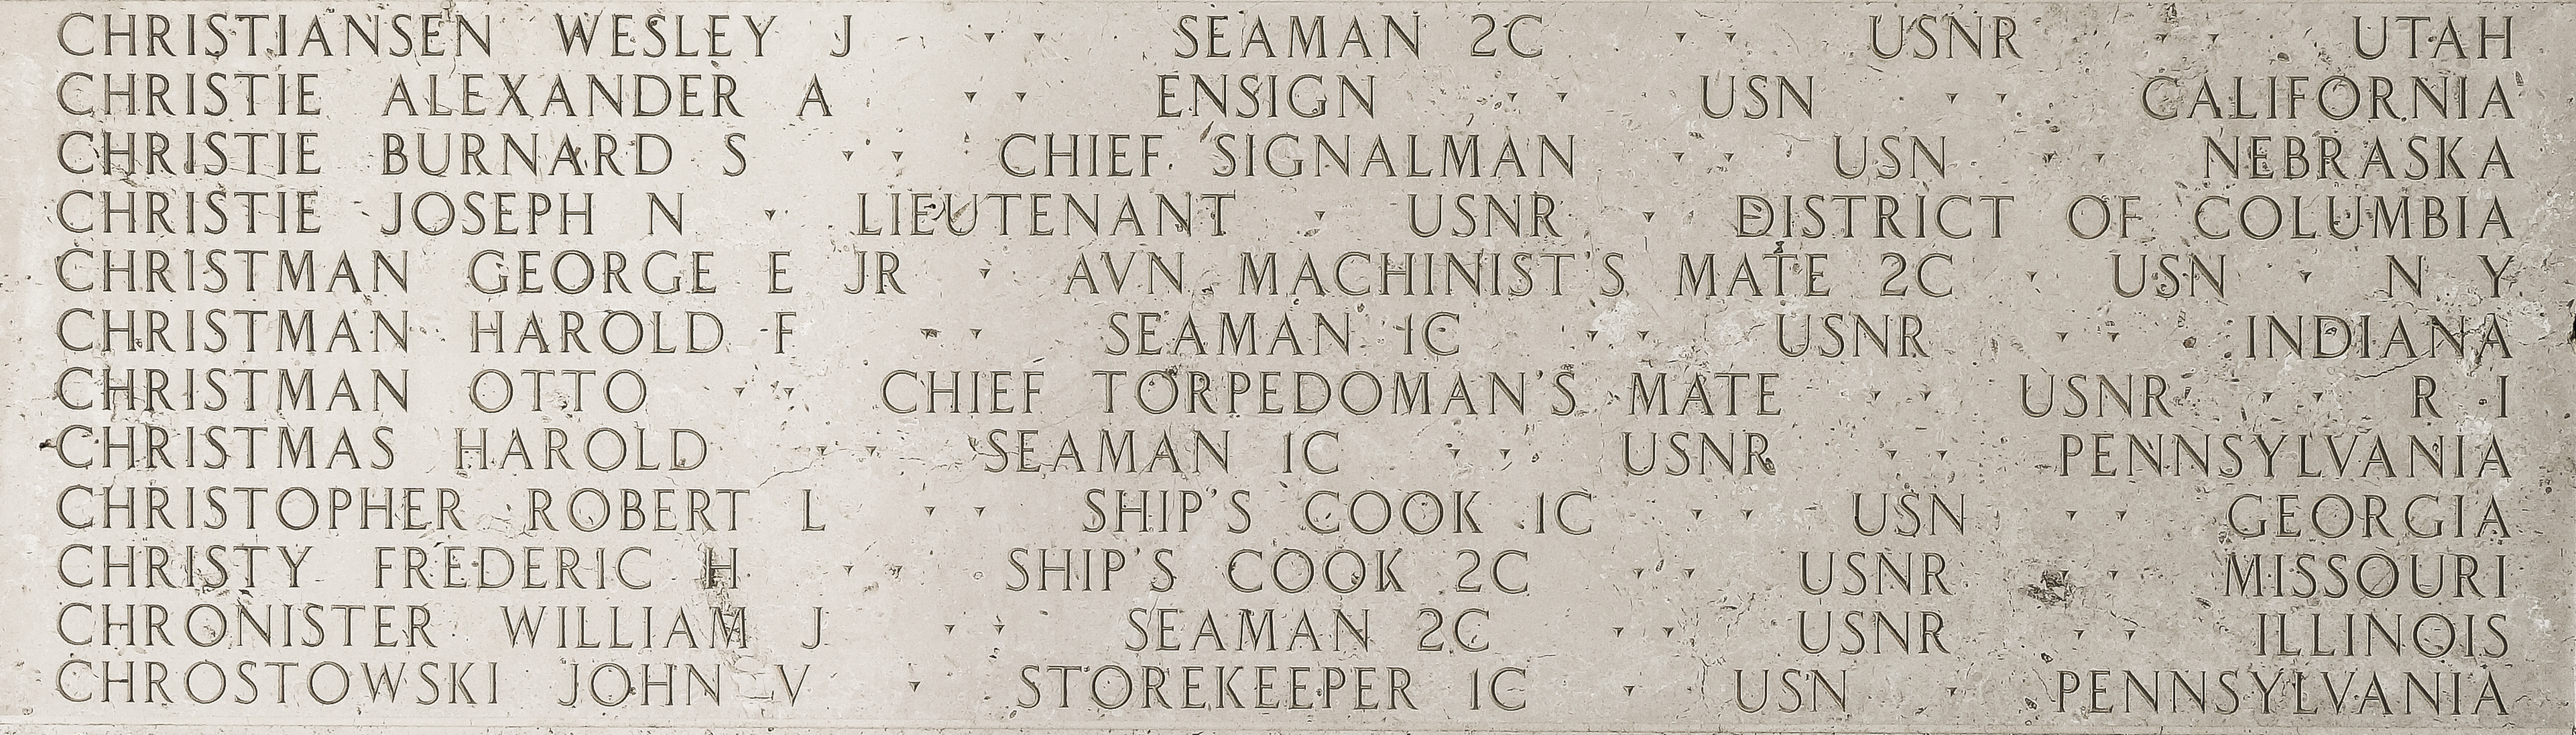 Burnard S. Christie, Chief Signalman